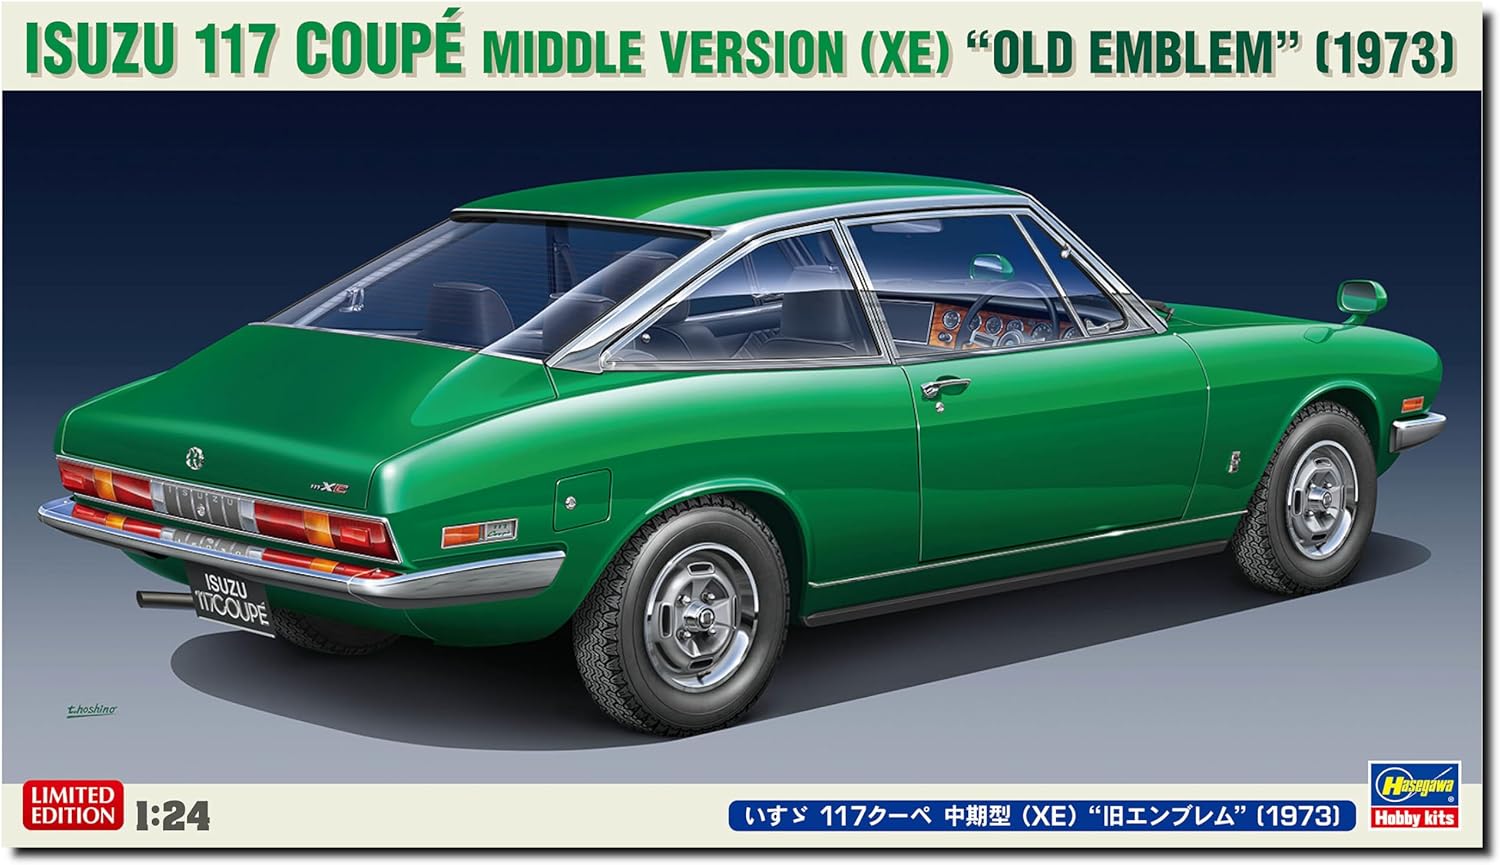 Hasegawa 20674 1/24 Isuzu 117 Coupe Medium (XE) Old Emblem 1973 - BanzaiHobby